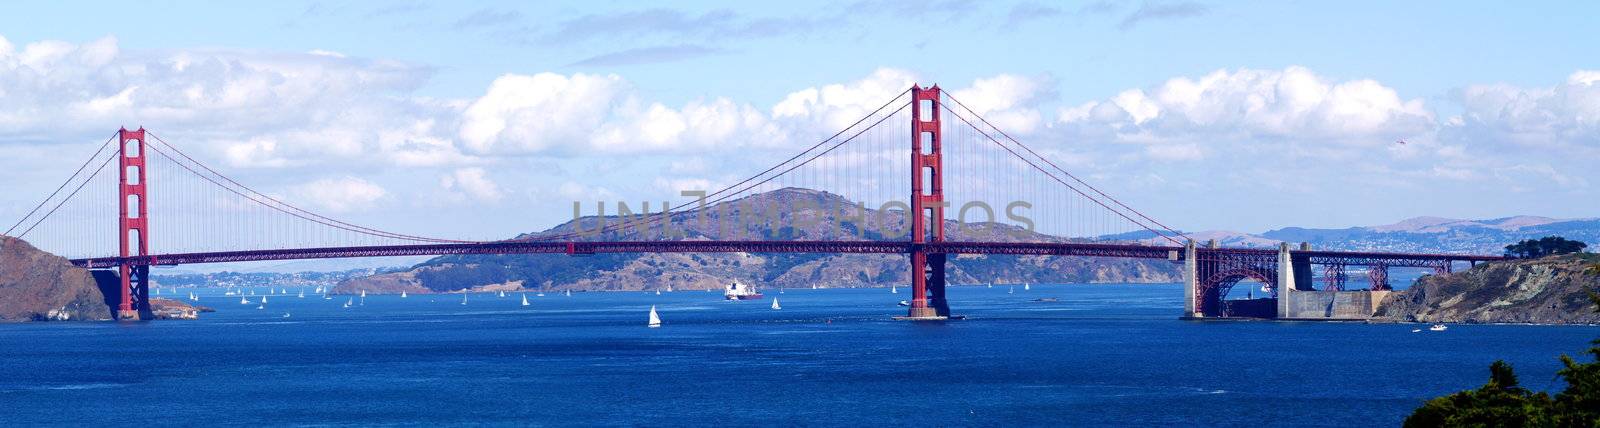 Golden Gate Bridge of San Francisco, California by anderm